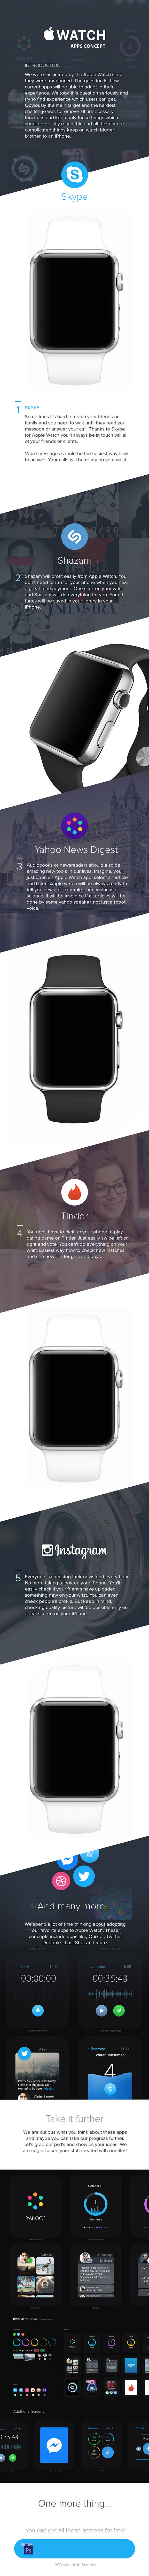 Apple Watch Concept ...